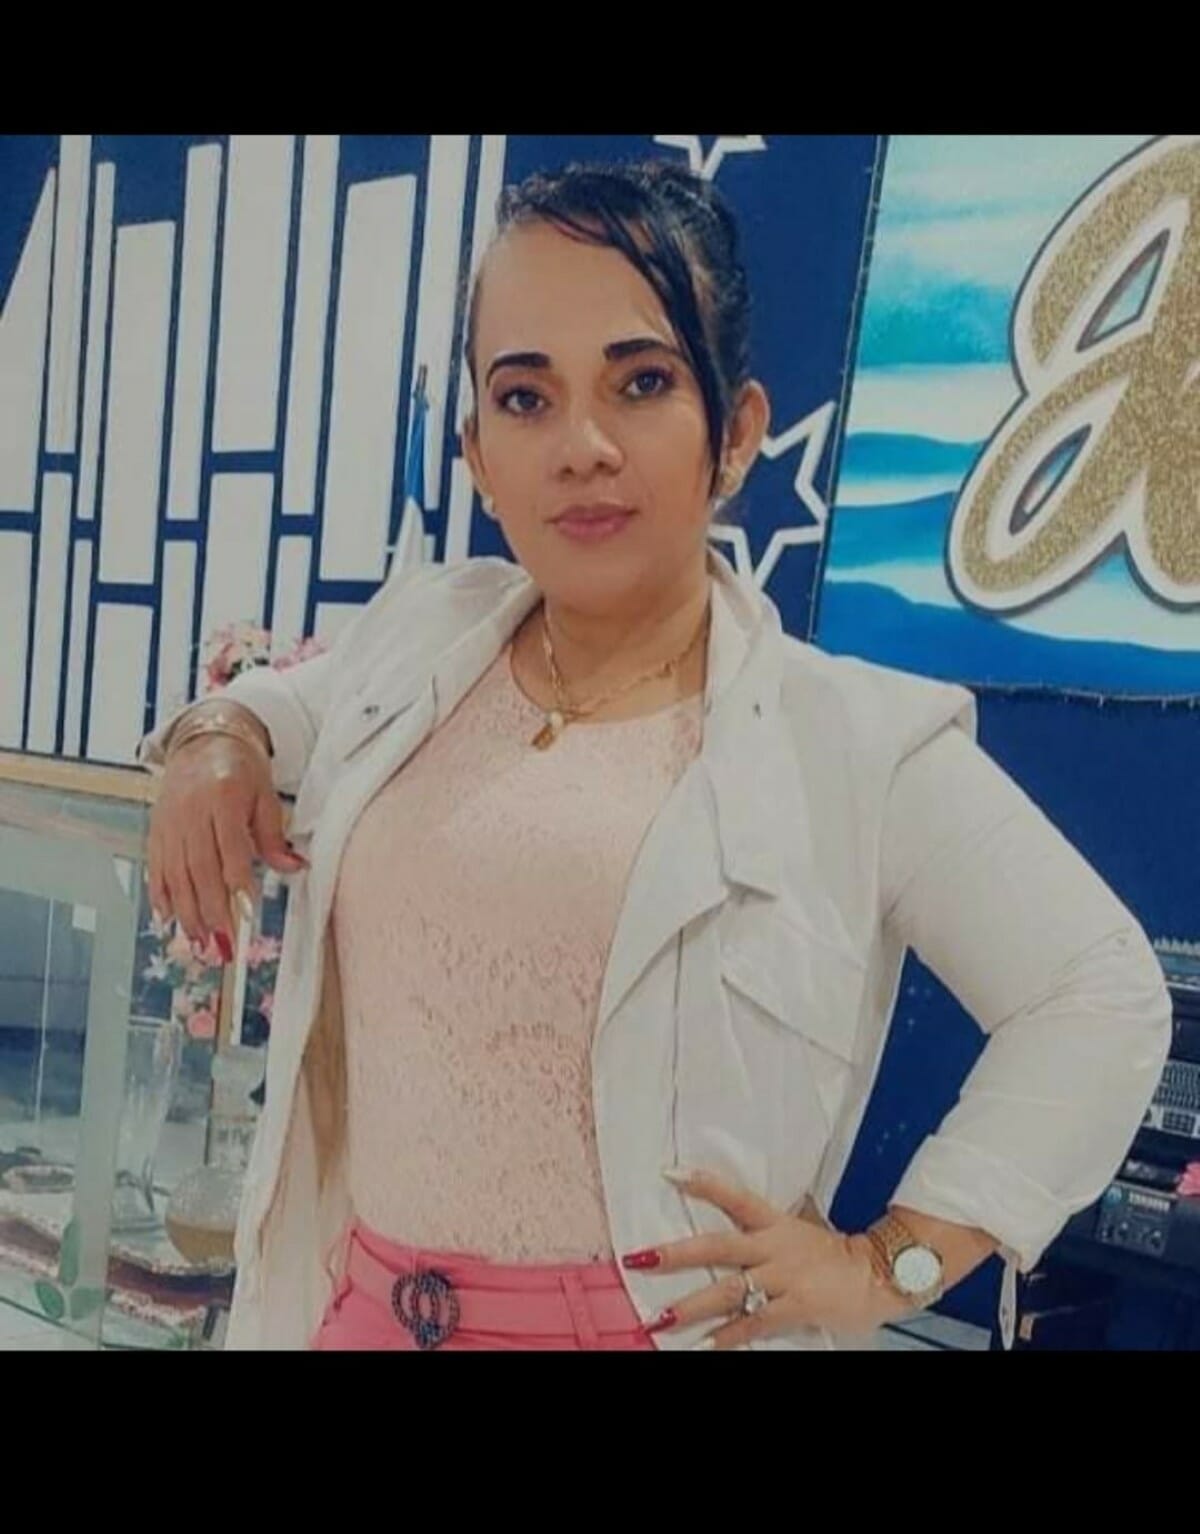 La joven Vicky Alexandra López Herrera se encuentra desaparecida